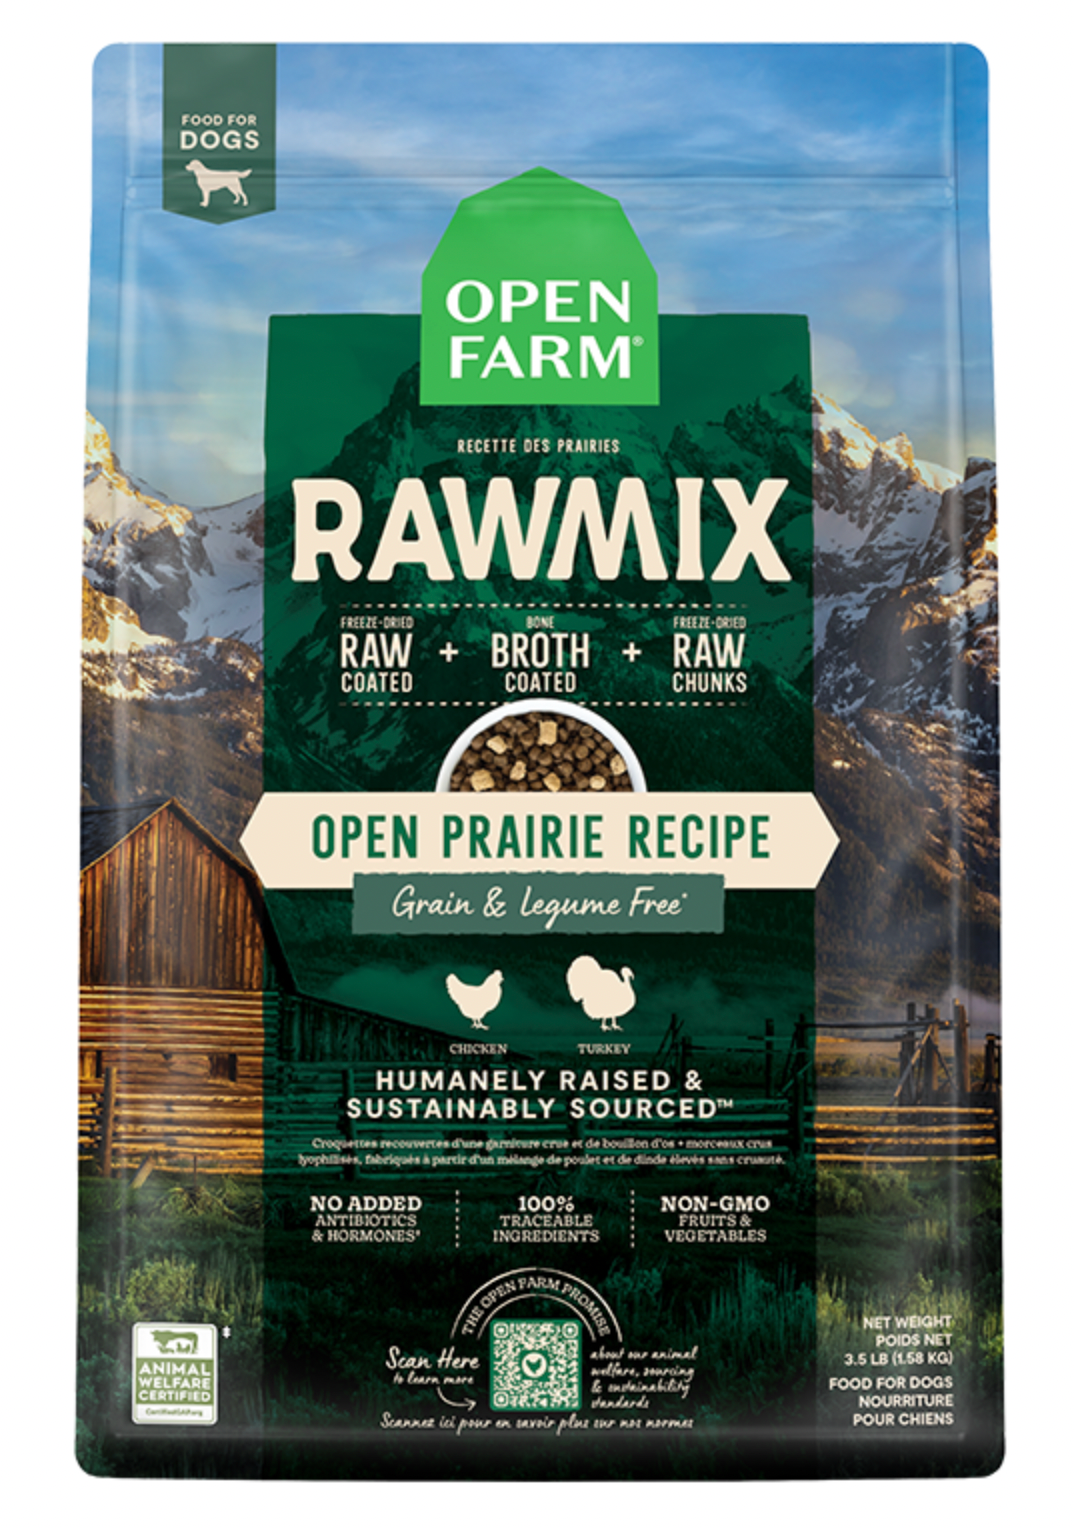 Open Farm Grain-Free RawMix for Dogs, Open Prairie Recipe